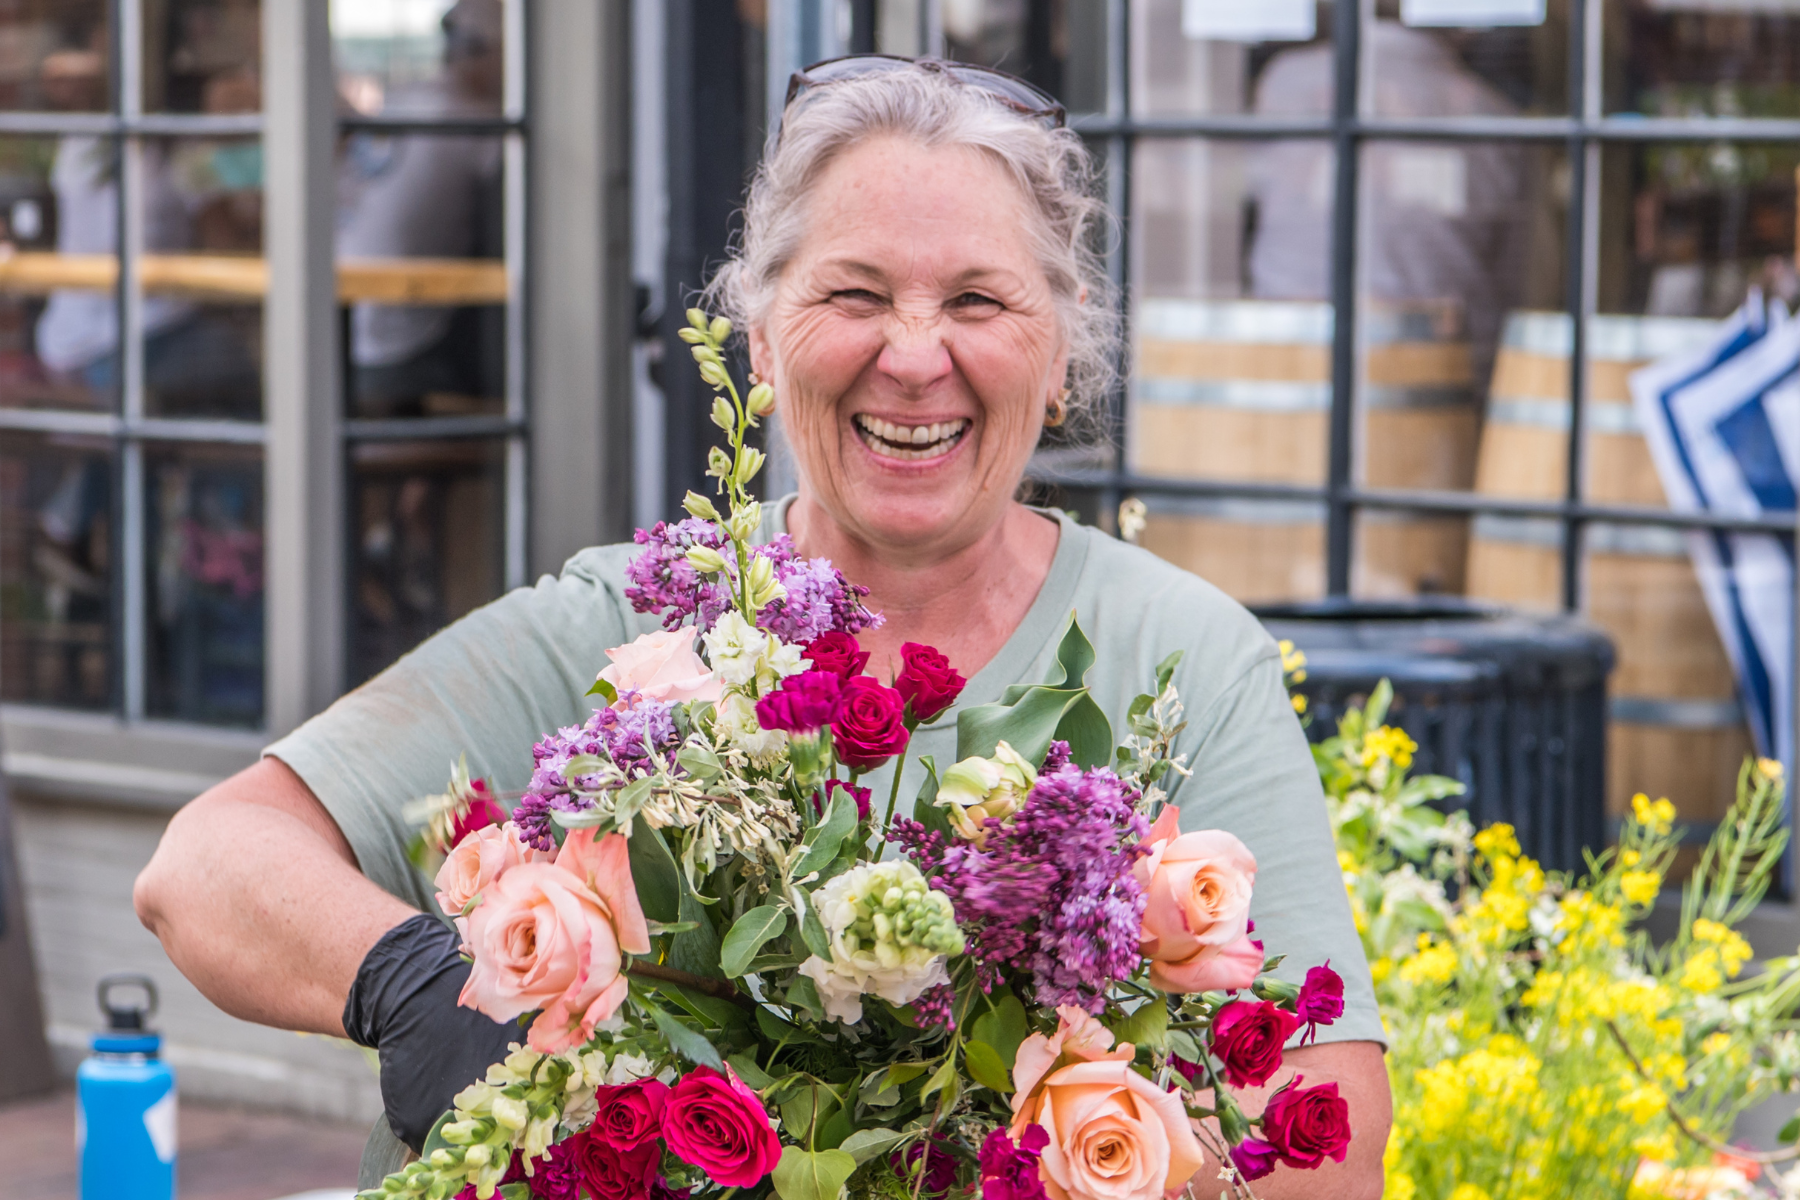 Introducing Flower & Garden Week: A New Celebration in Leesburg